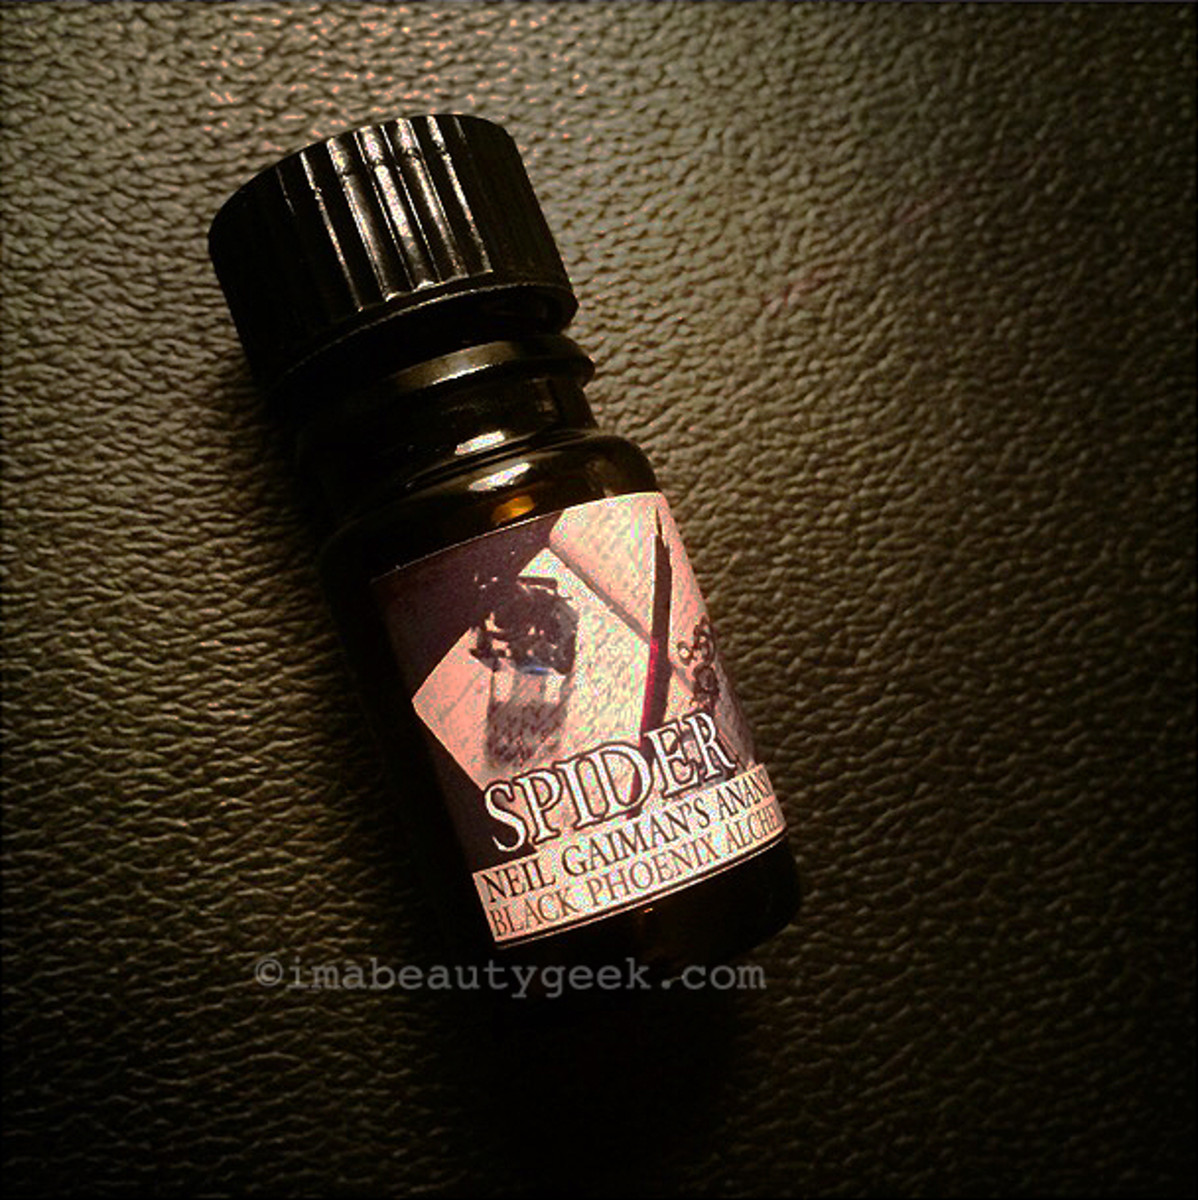 Spider perfume oil by Black Phoenix Alchemy Lab